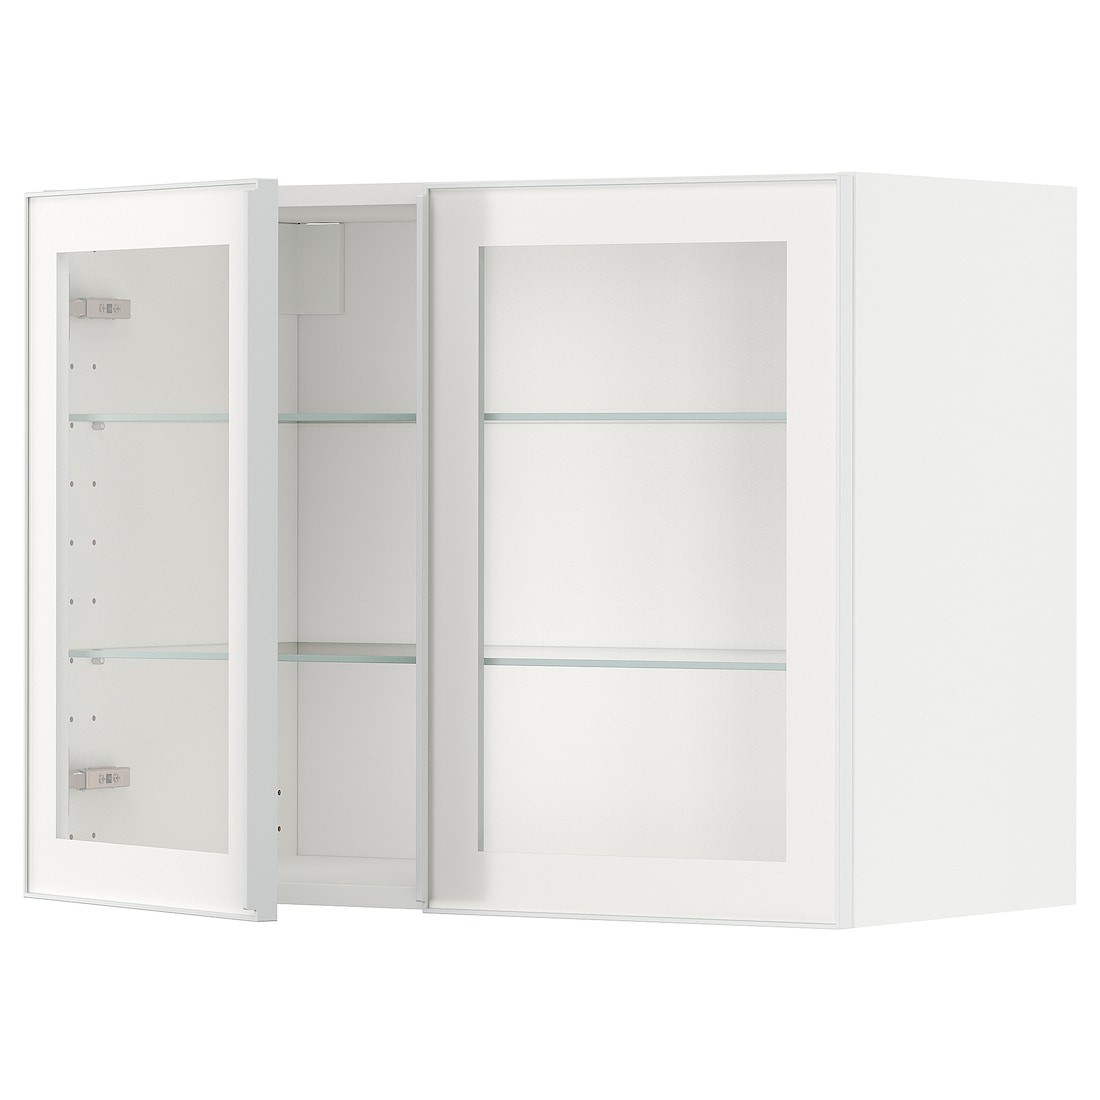 METOD МЕТОД Навесной шкаф, белый / Hesta белое прозрачное стекло, 80x60 см